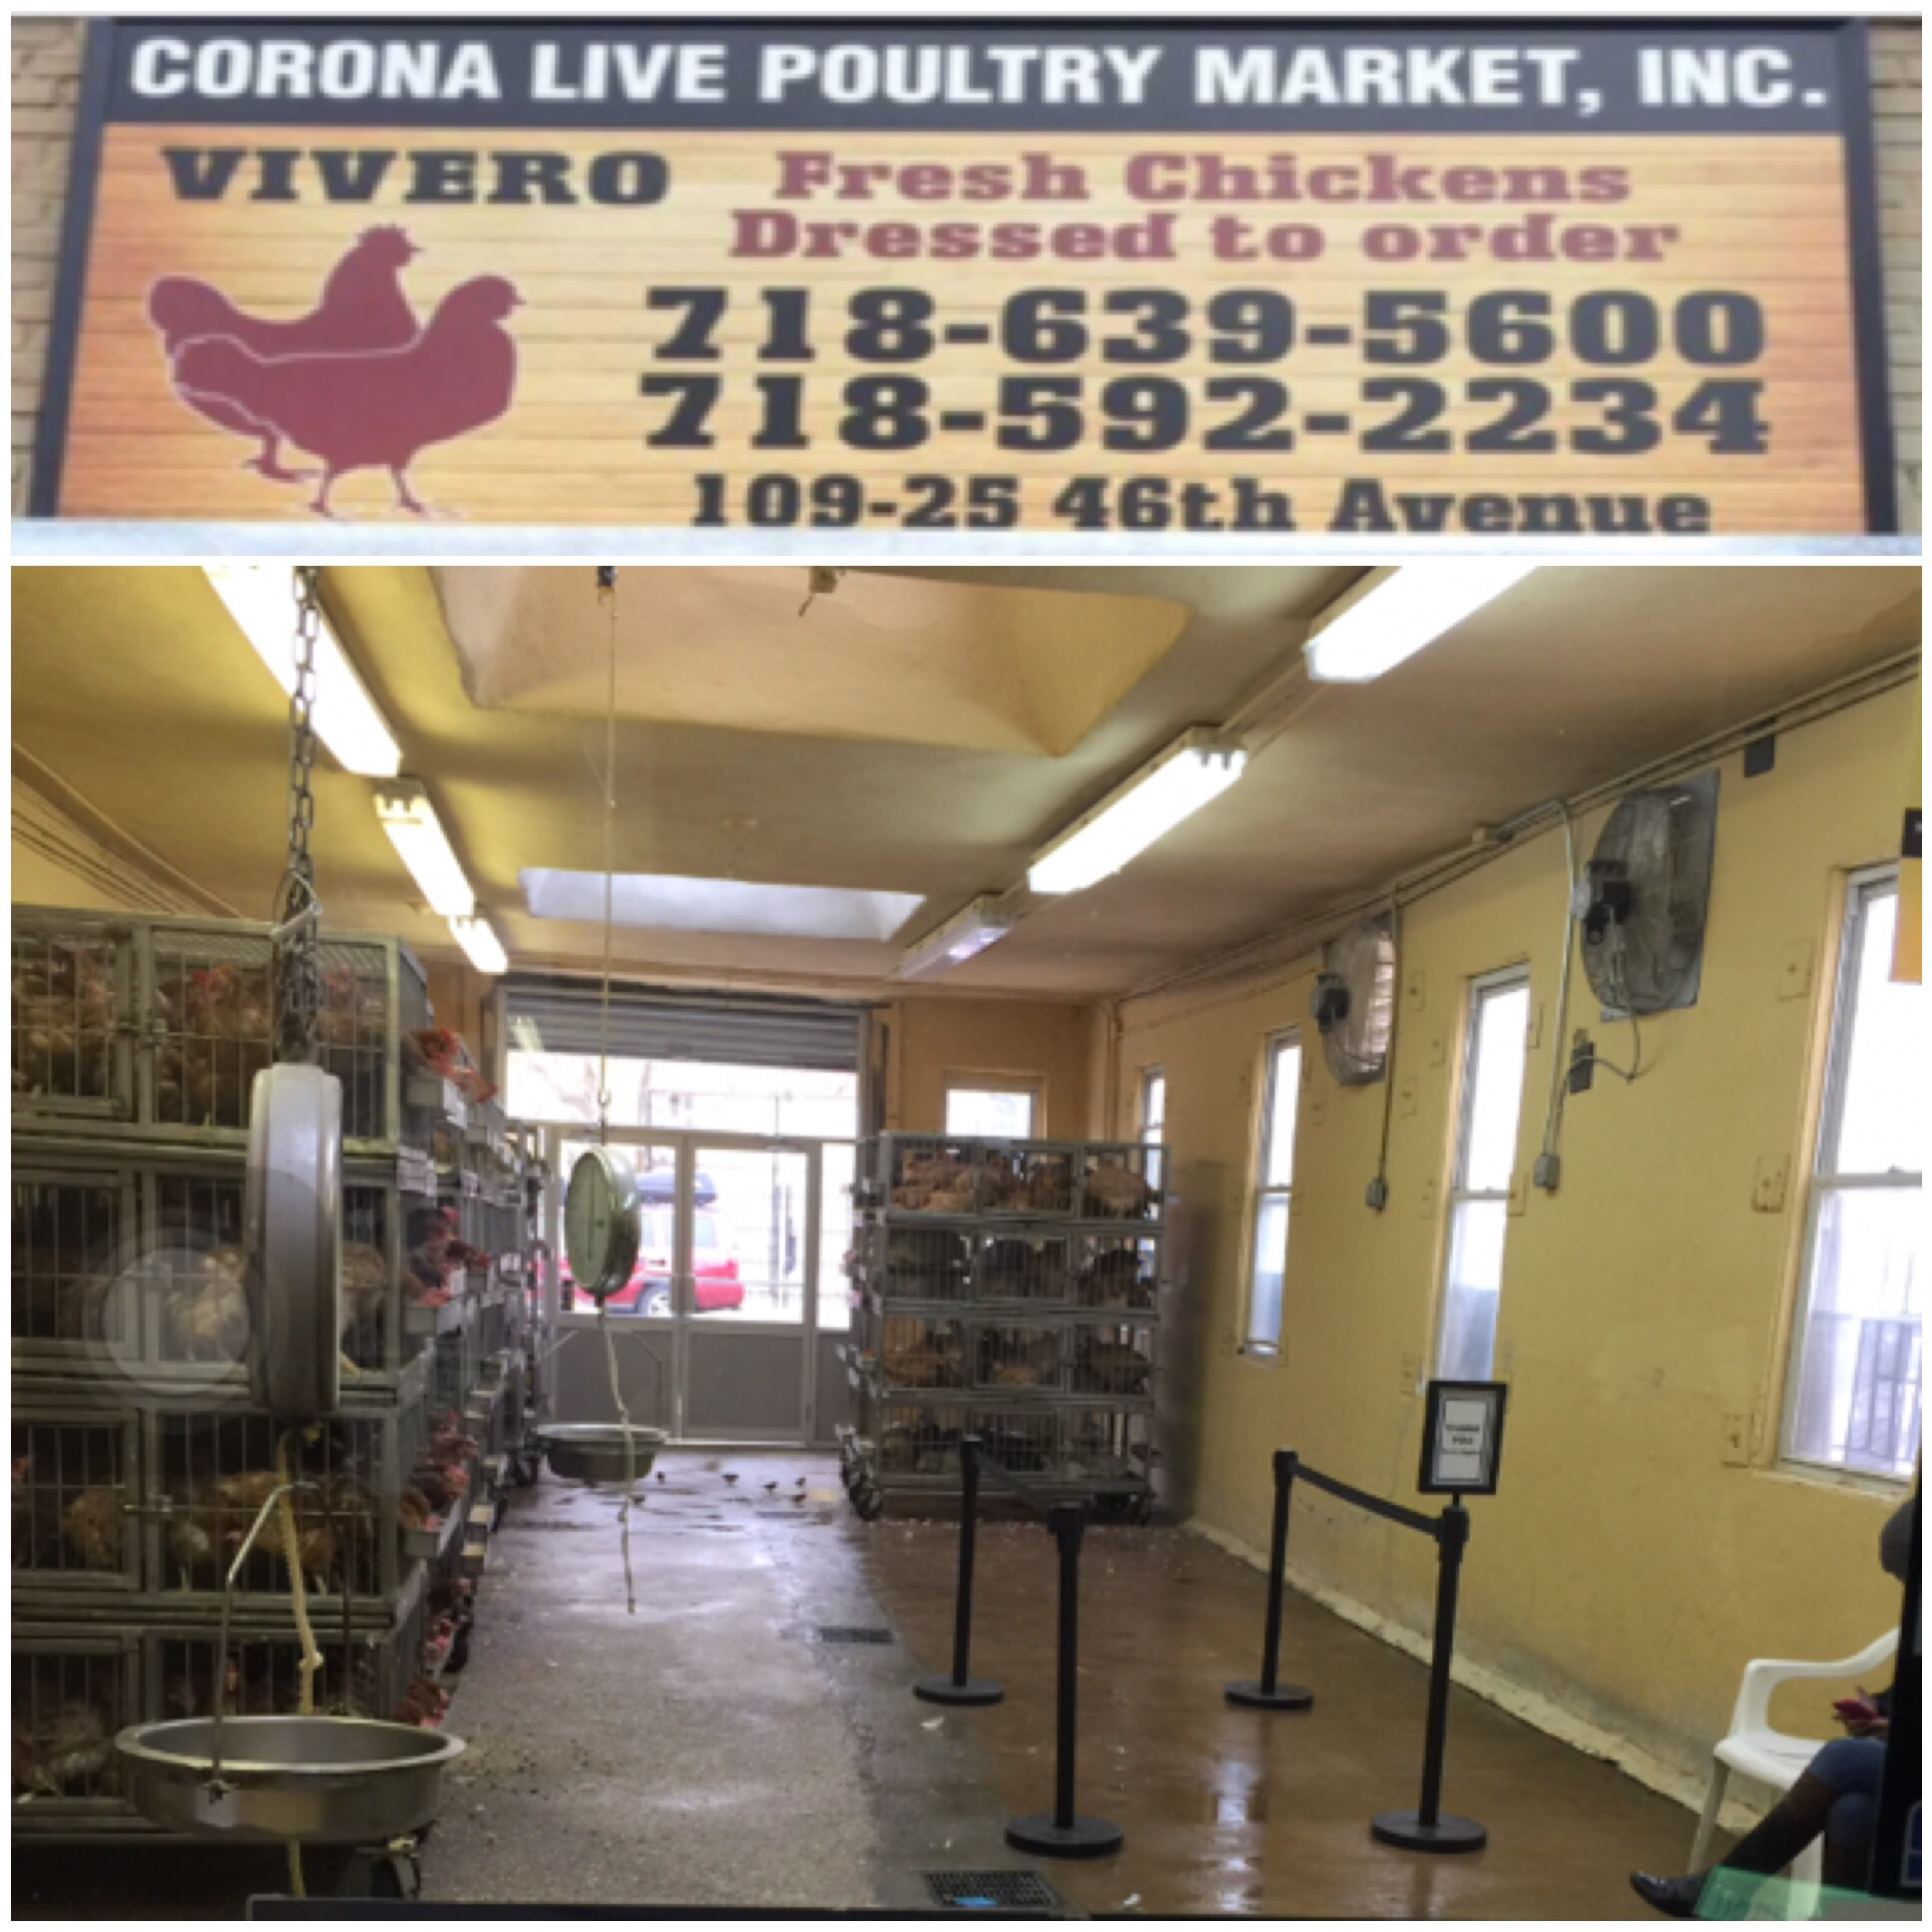 Corona Live Poultry Market, Inc.